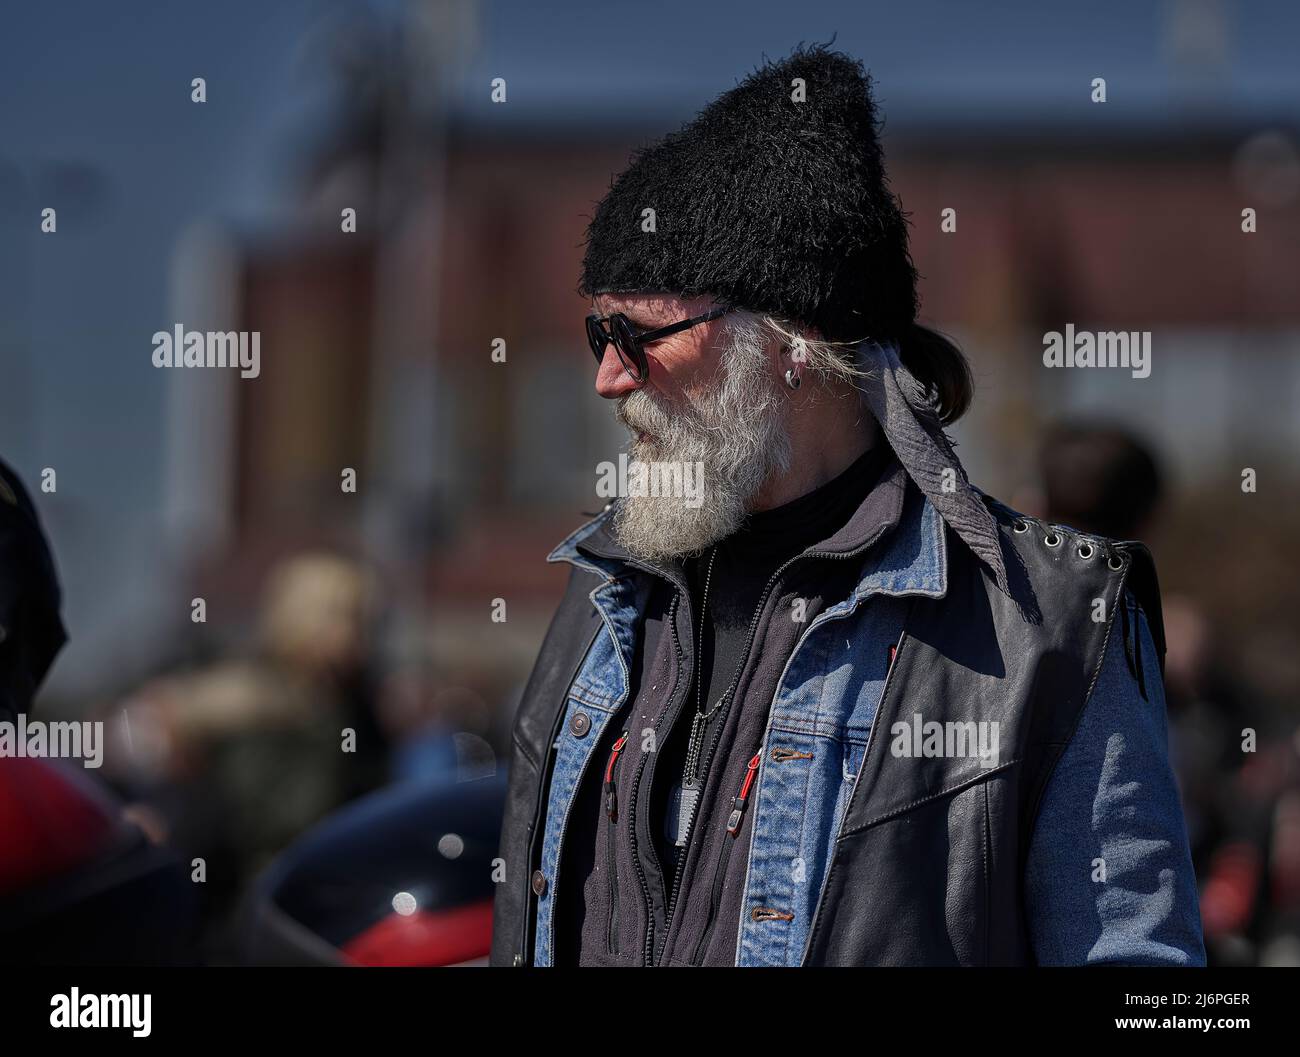 30-04-2022 Riga, Latvia Fashion portrait of bearded man in hat ready for road trip Stock Photo